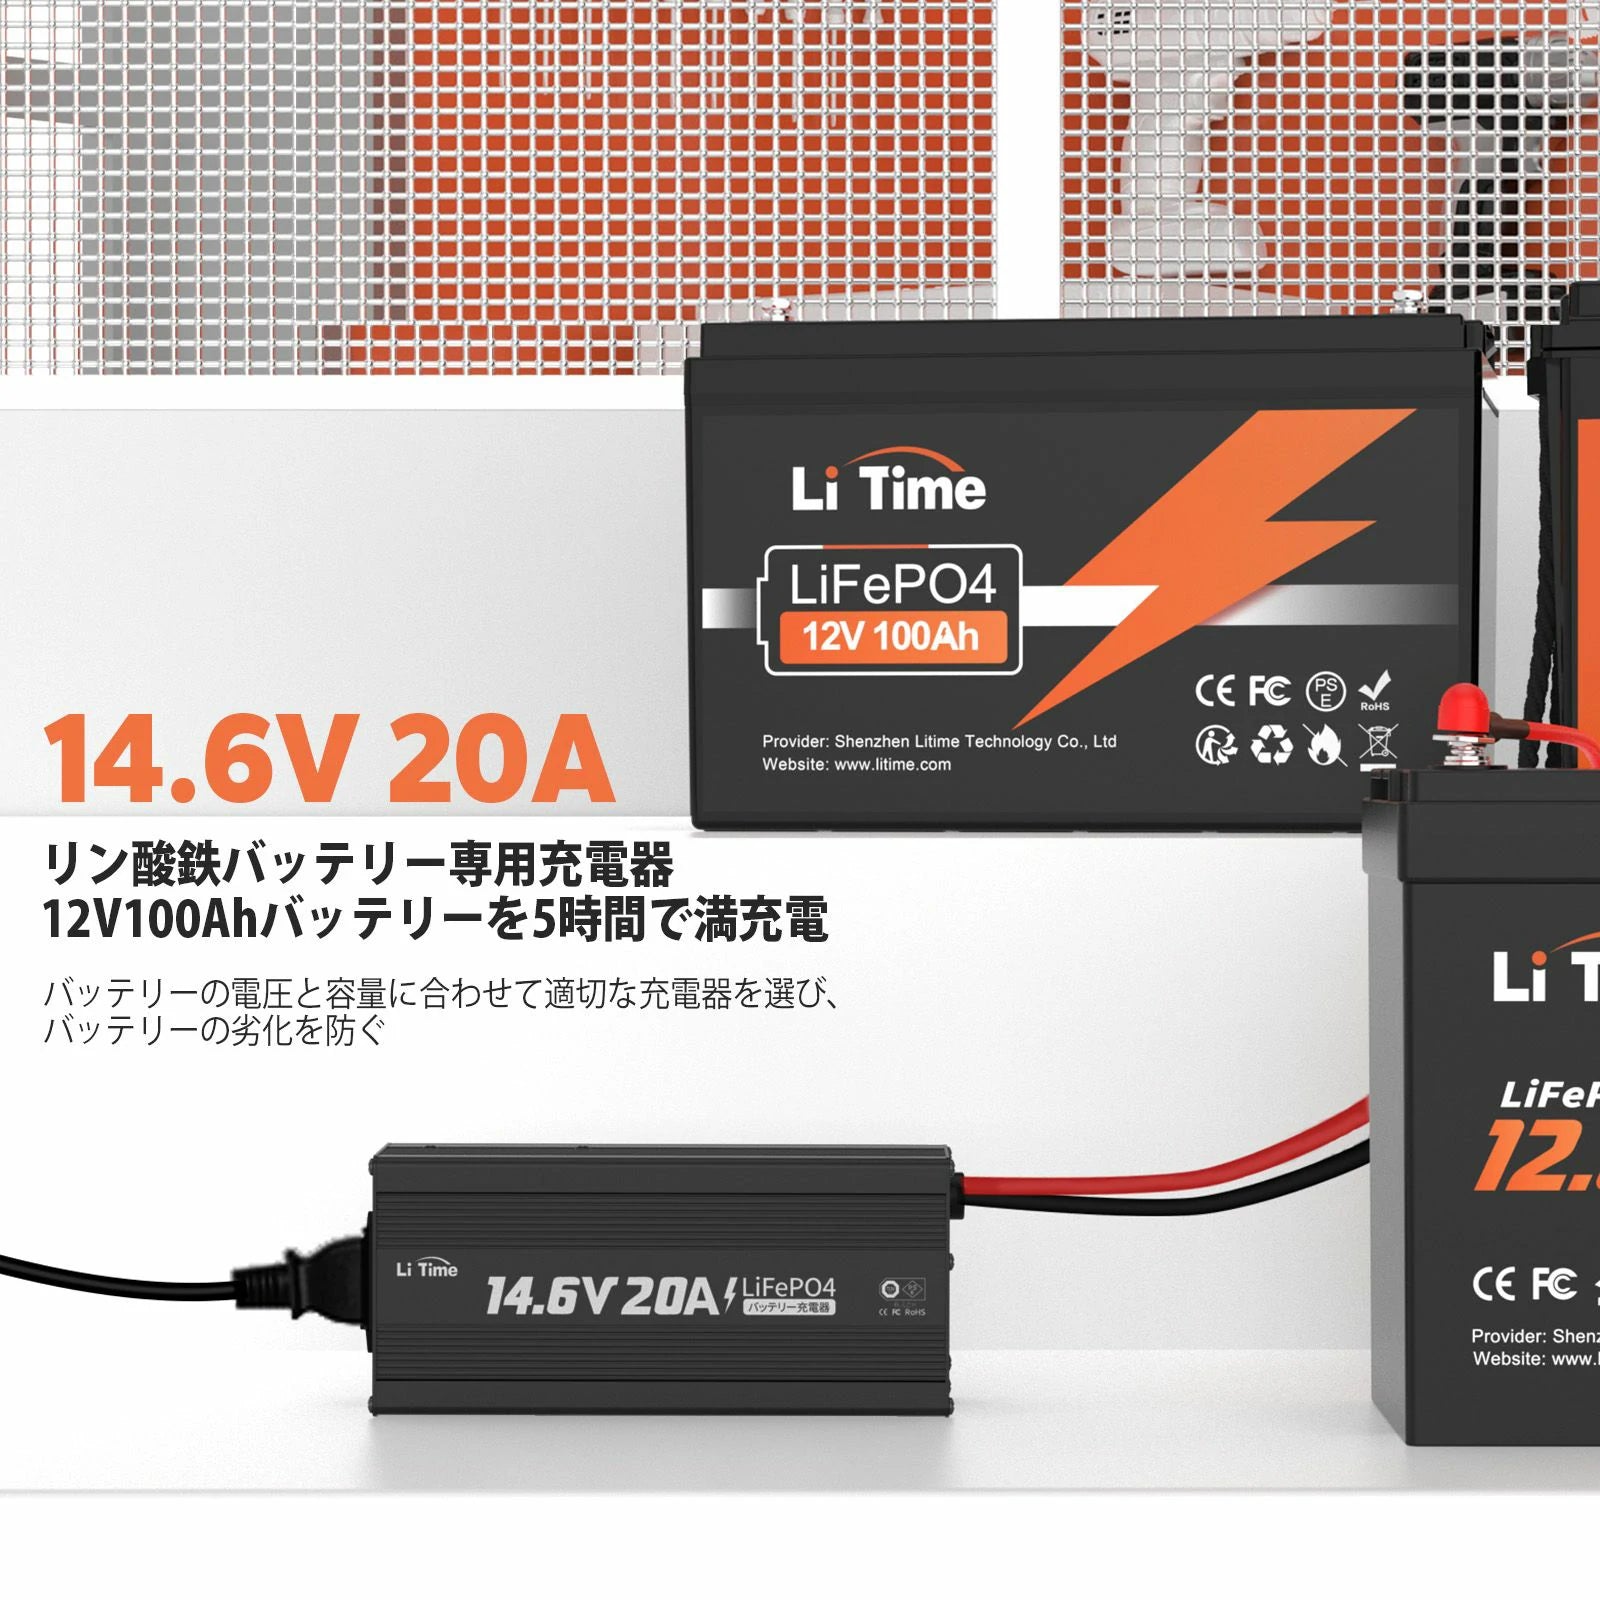 LiTime「Ampere Time 」 14.6V 20A リン酸鉄リチウムバッテリー専用・速い充電器   12Vバッテリー適用 https://jp.litime.com/products/litime14-6v20a